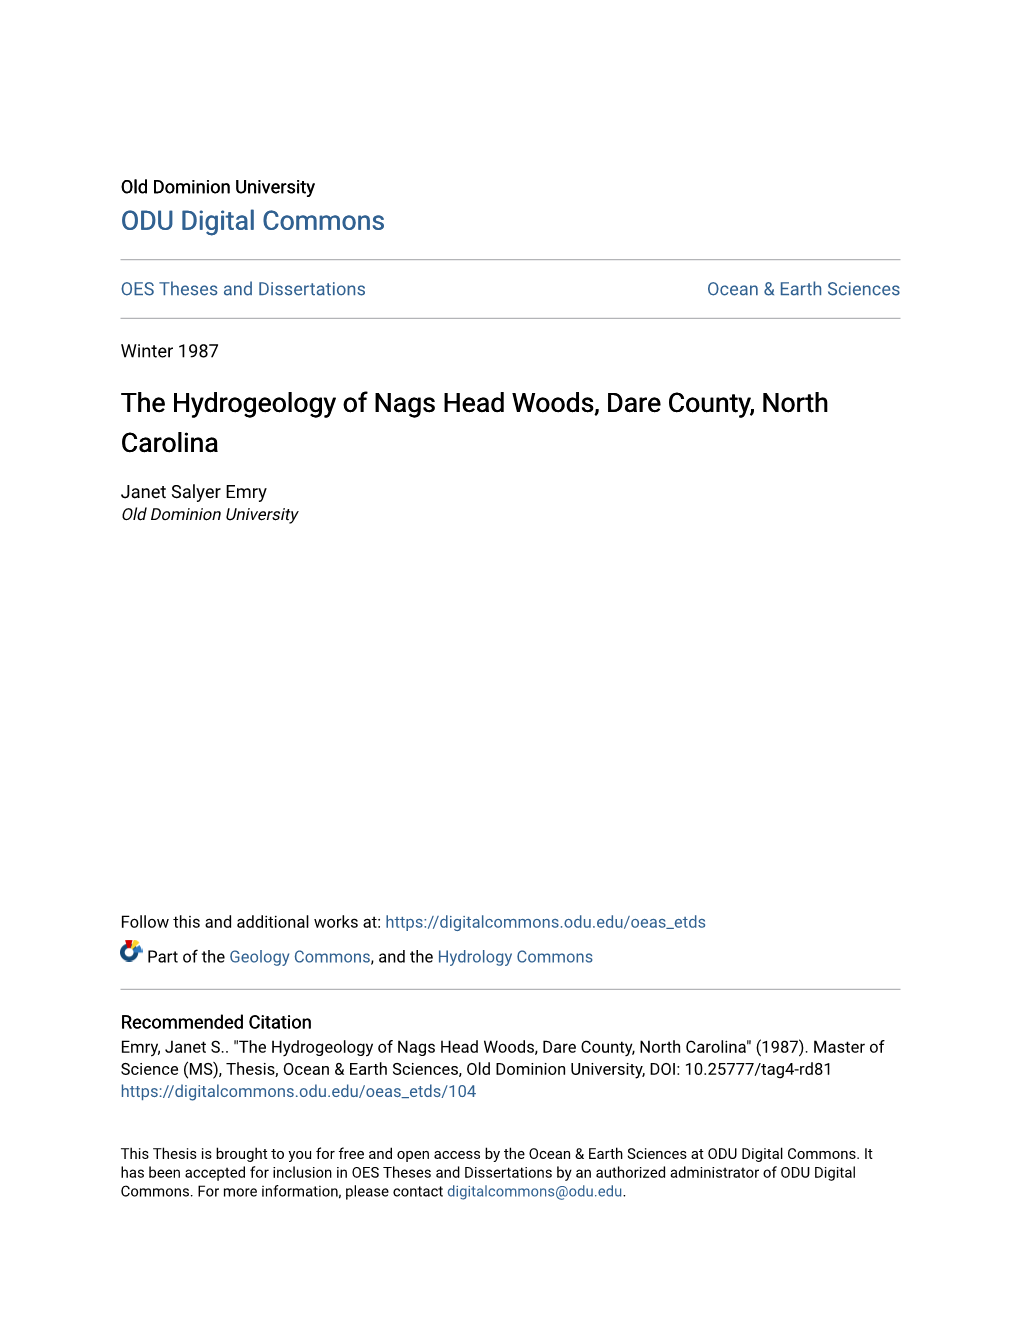 The Hydrogeology of Nags Head Woods, Dare County, North Carolina